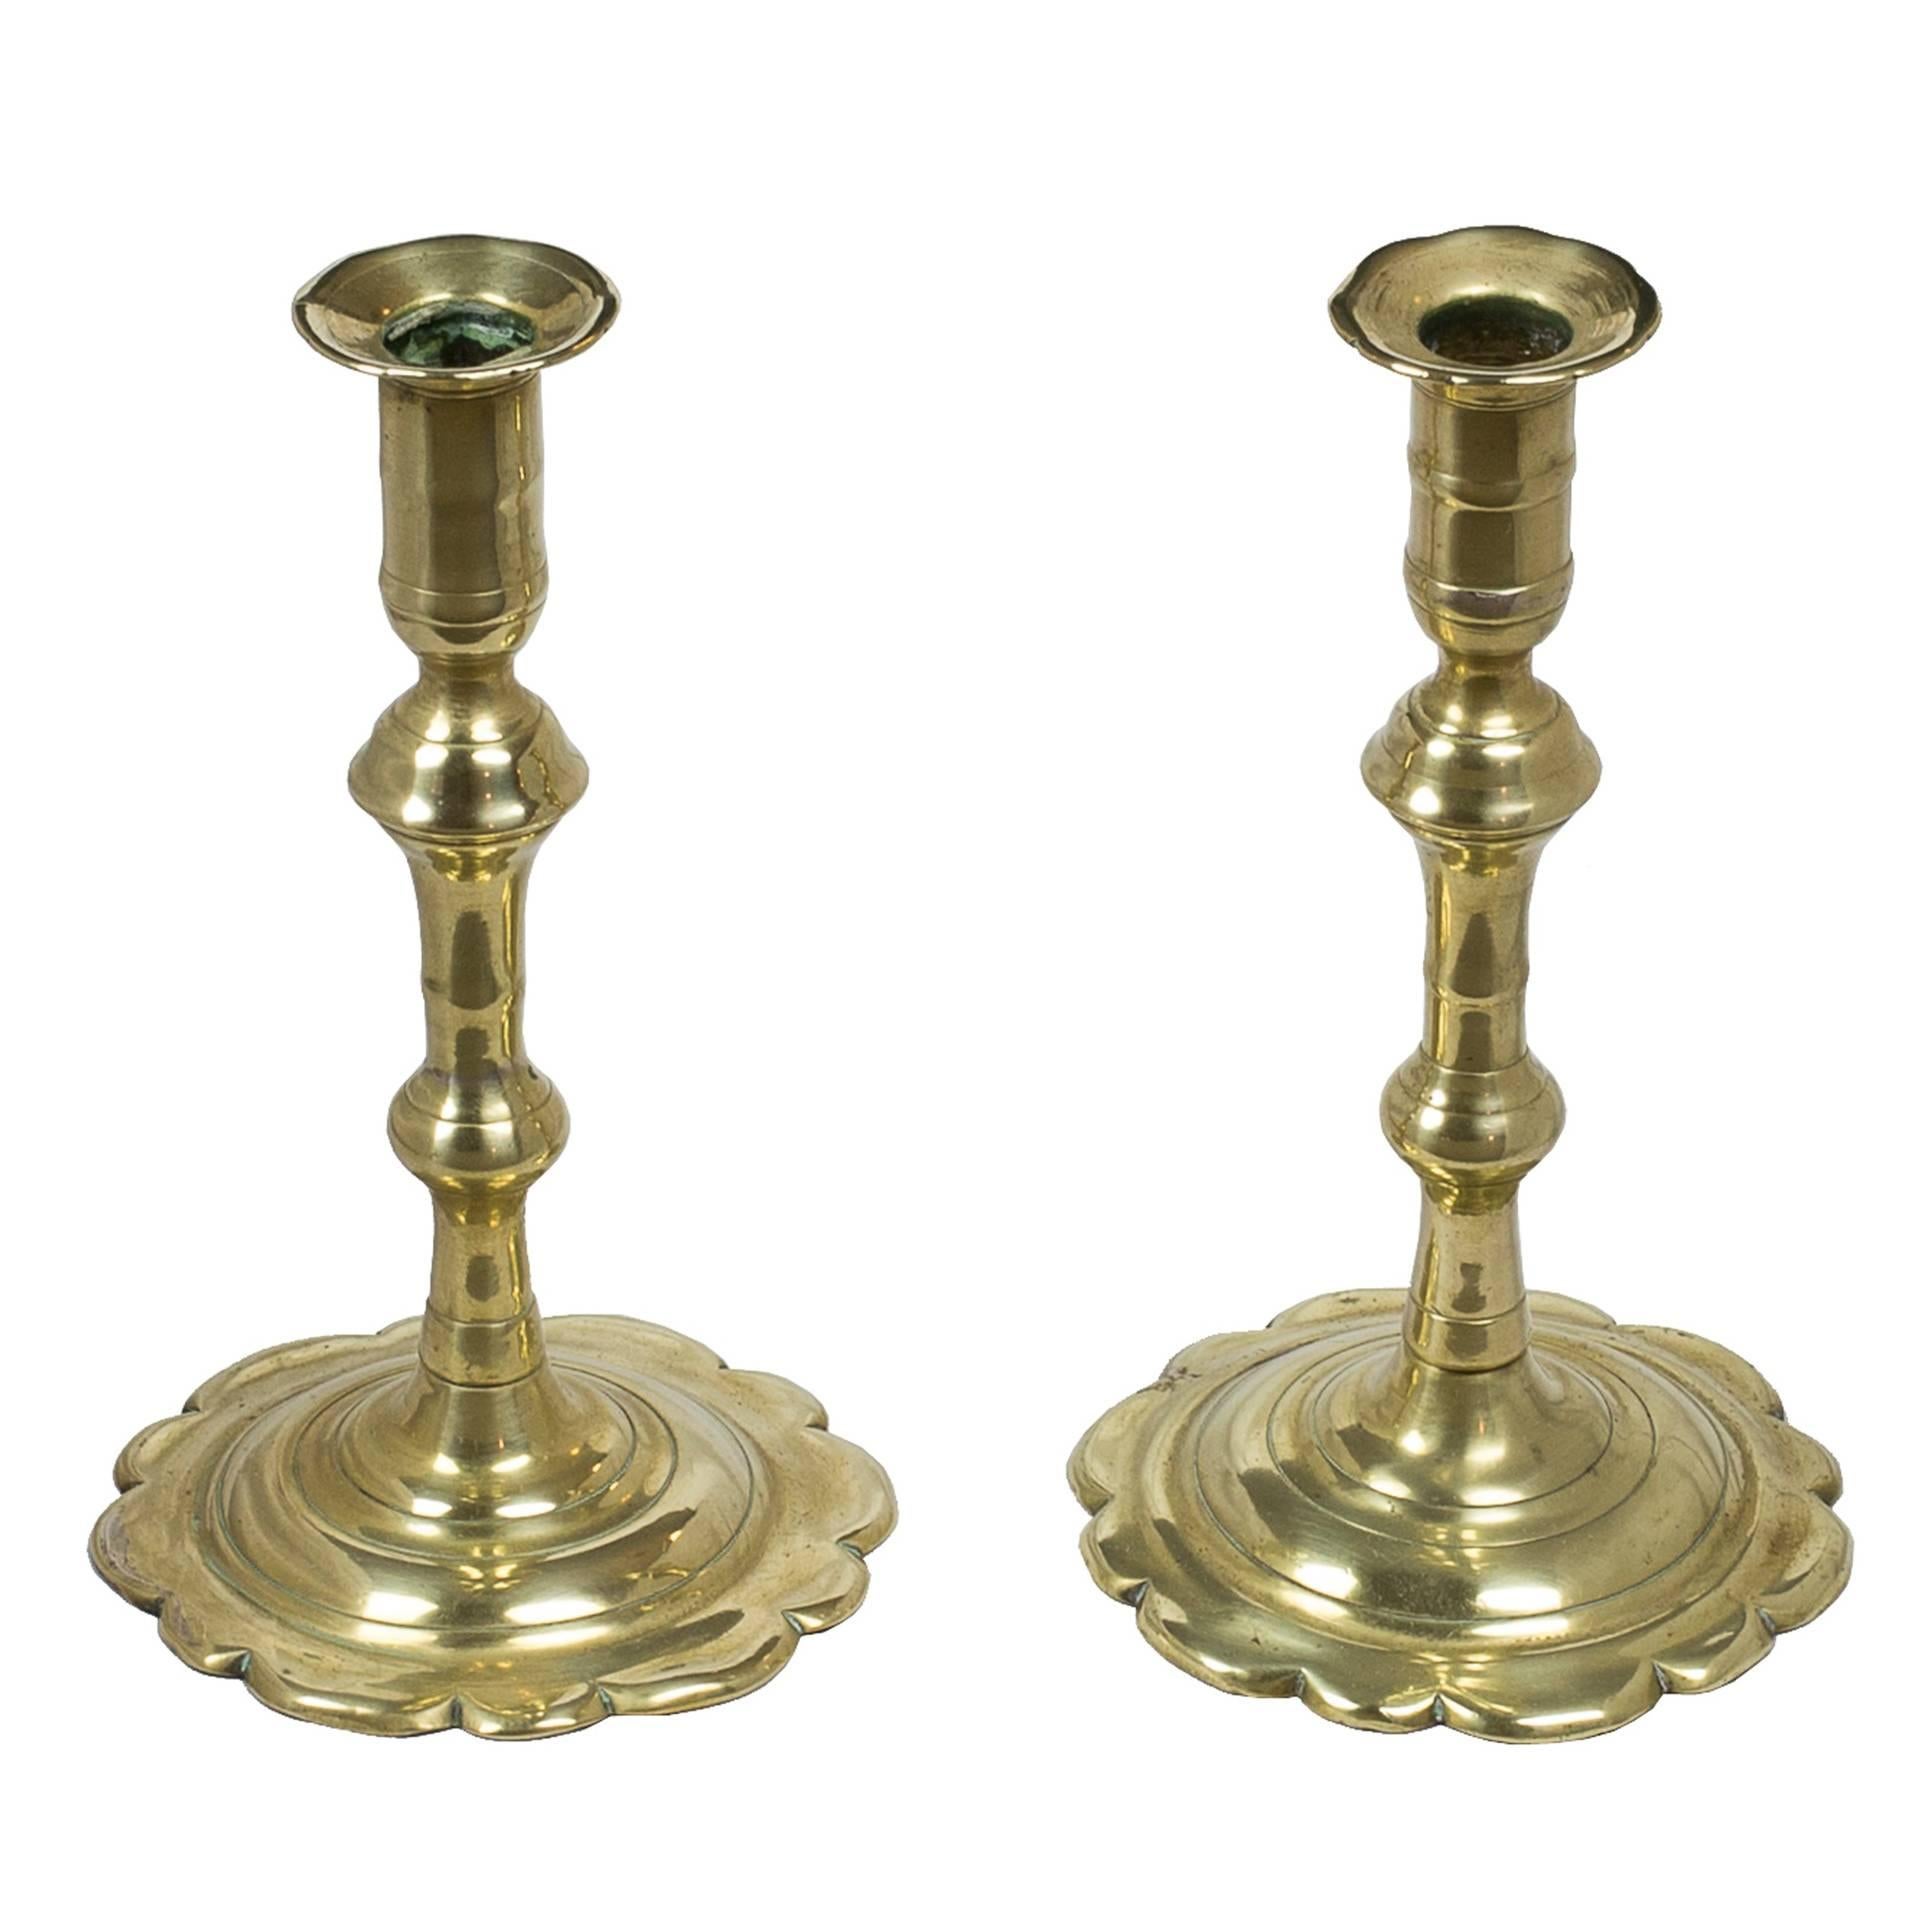 Pair of English Brass Candlesticks, circa 1750-1760